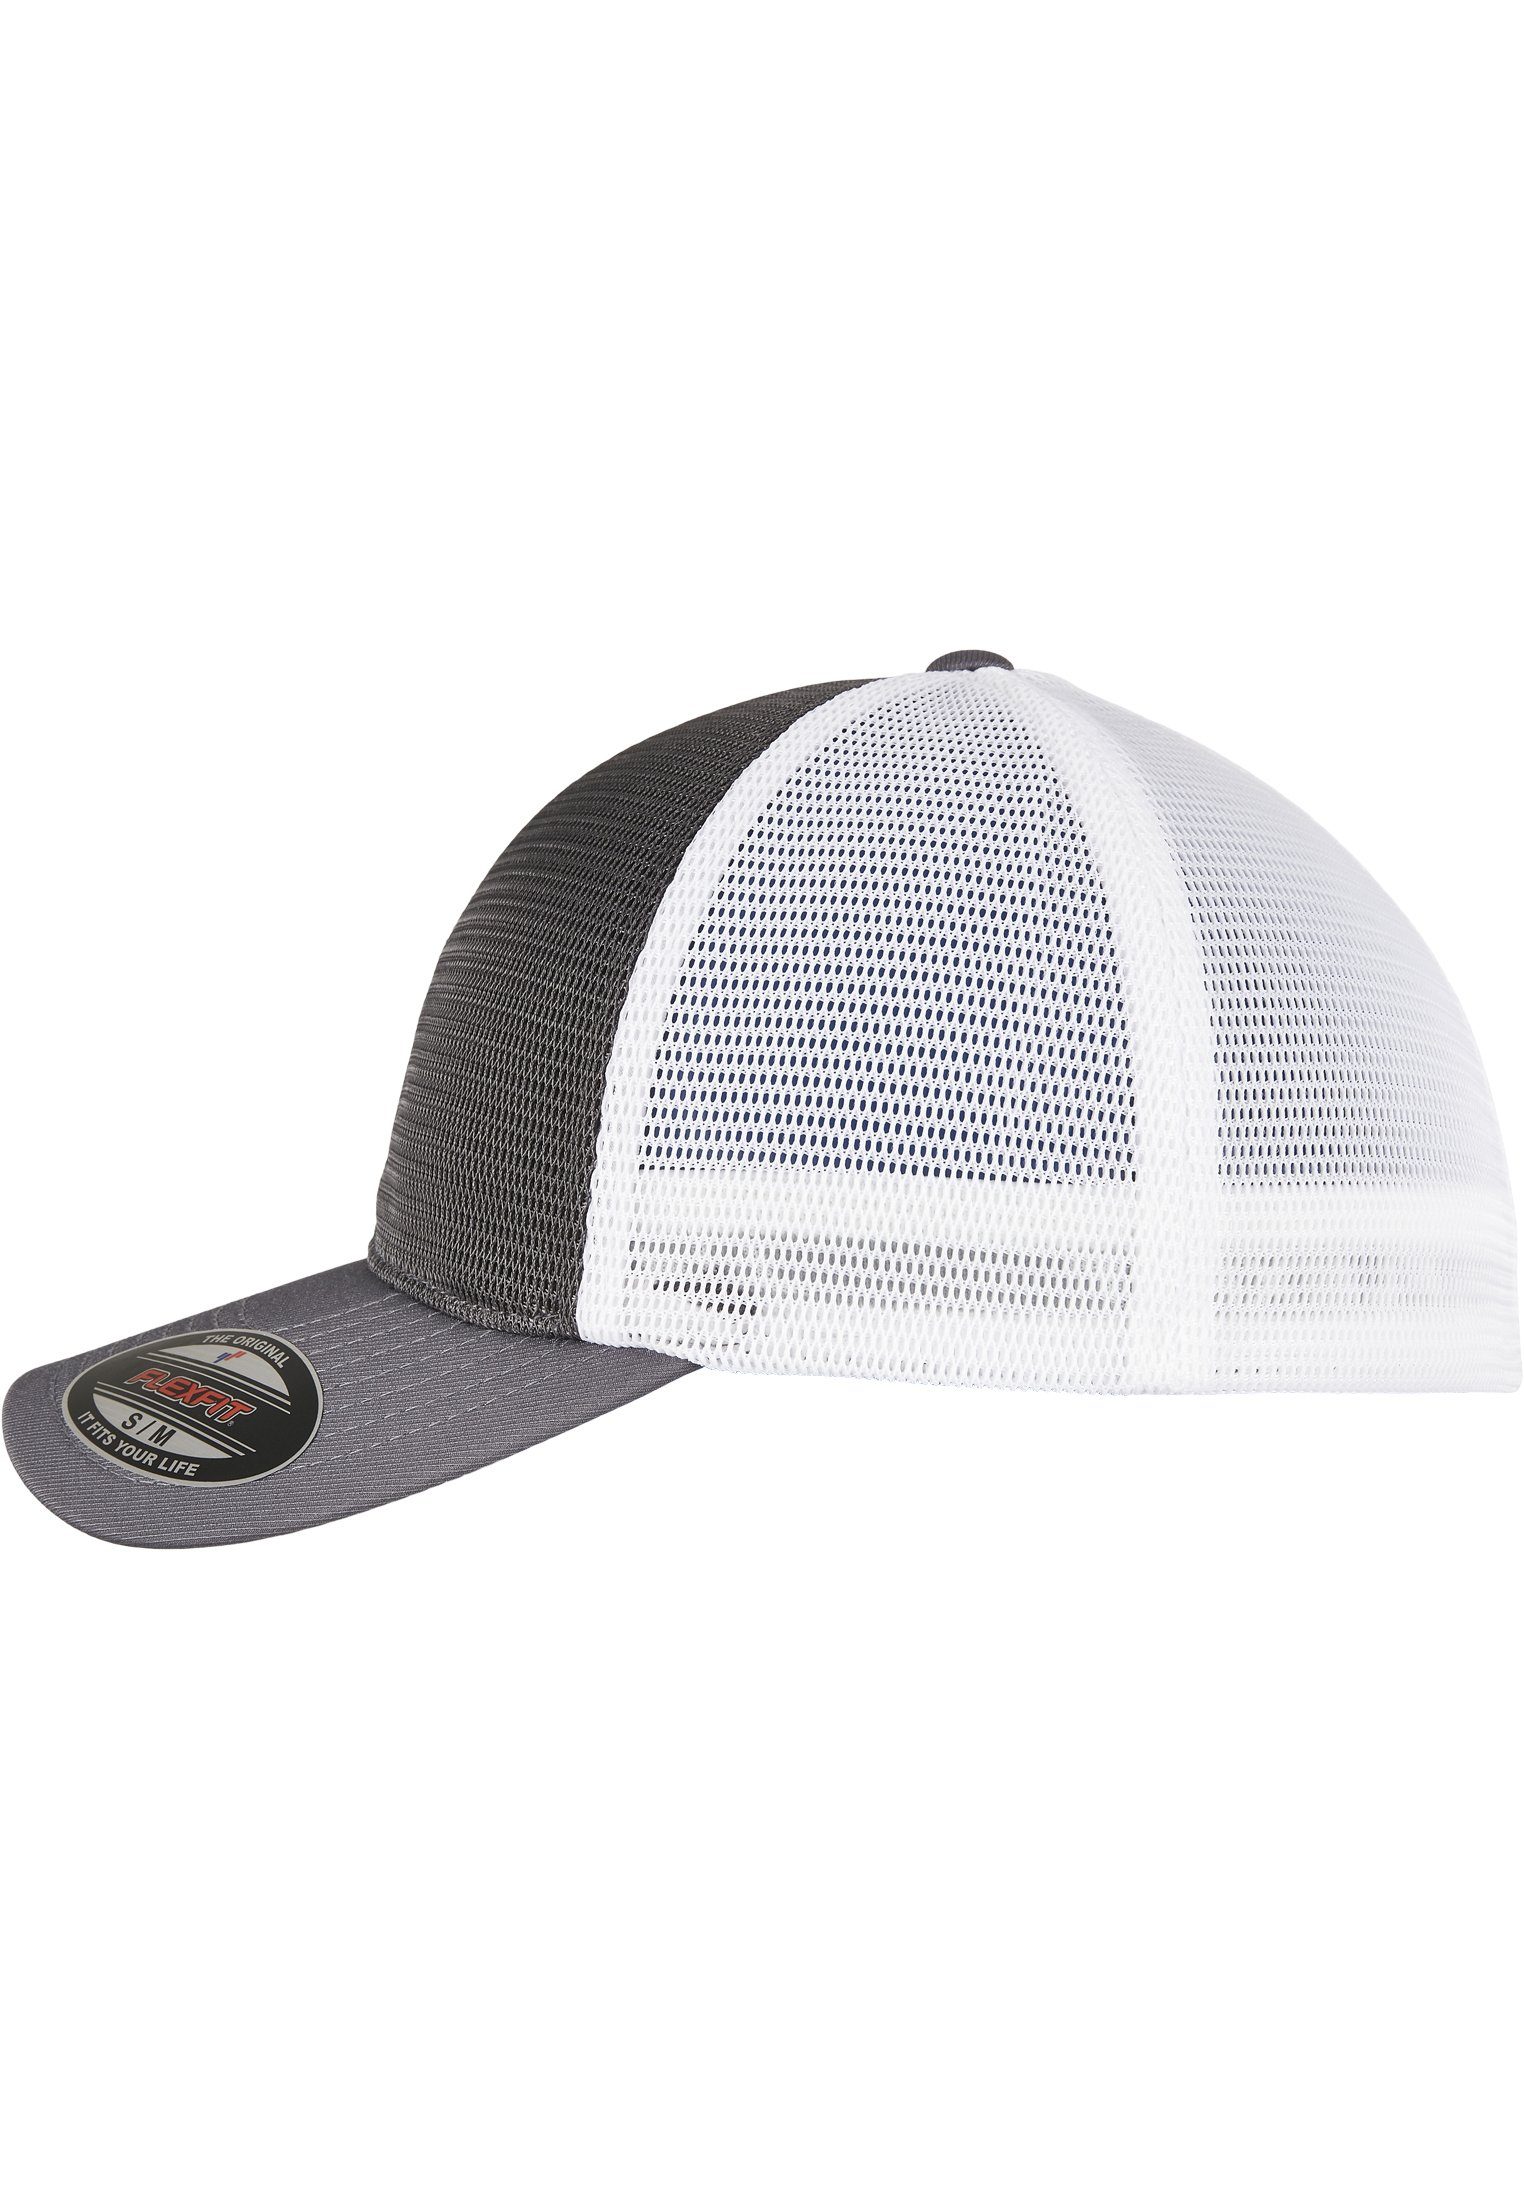 Flexfit Flex Cap Kollektion 360 2-TONE CAP charcoal/white FLEXFIT Neue OMNIMESH